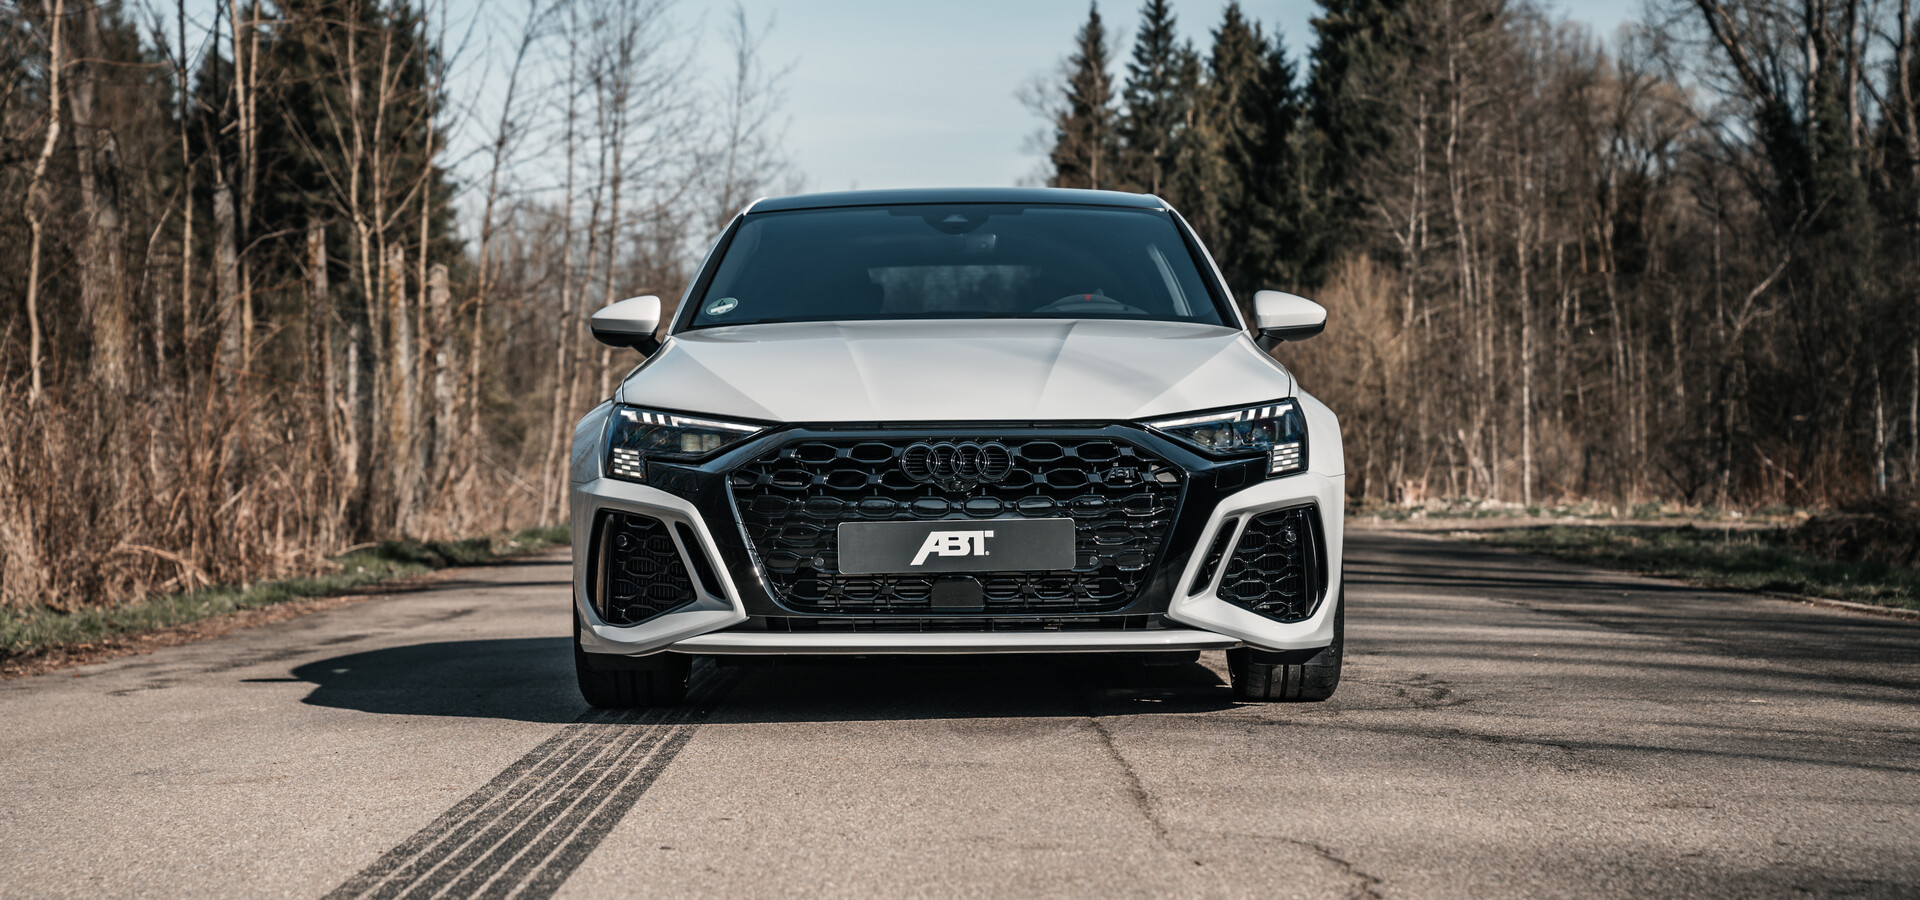 Audi RS3-R ABT conversion kit